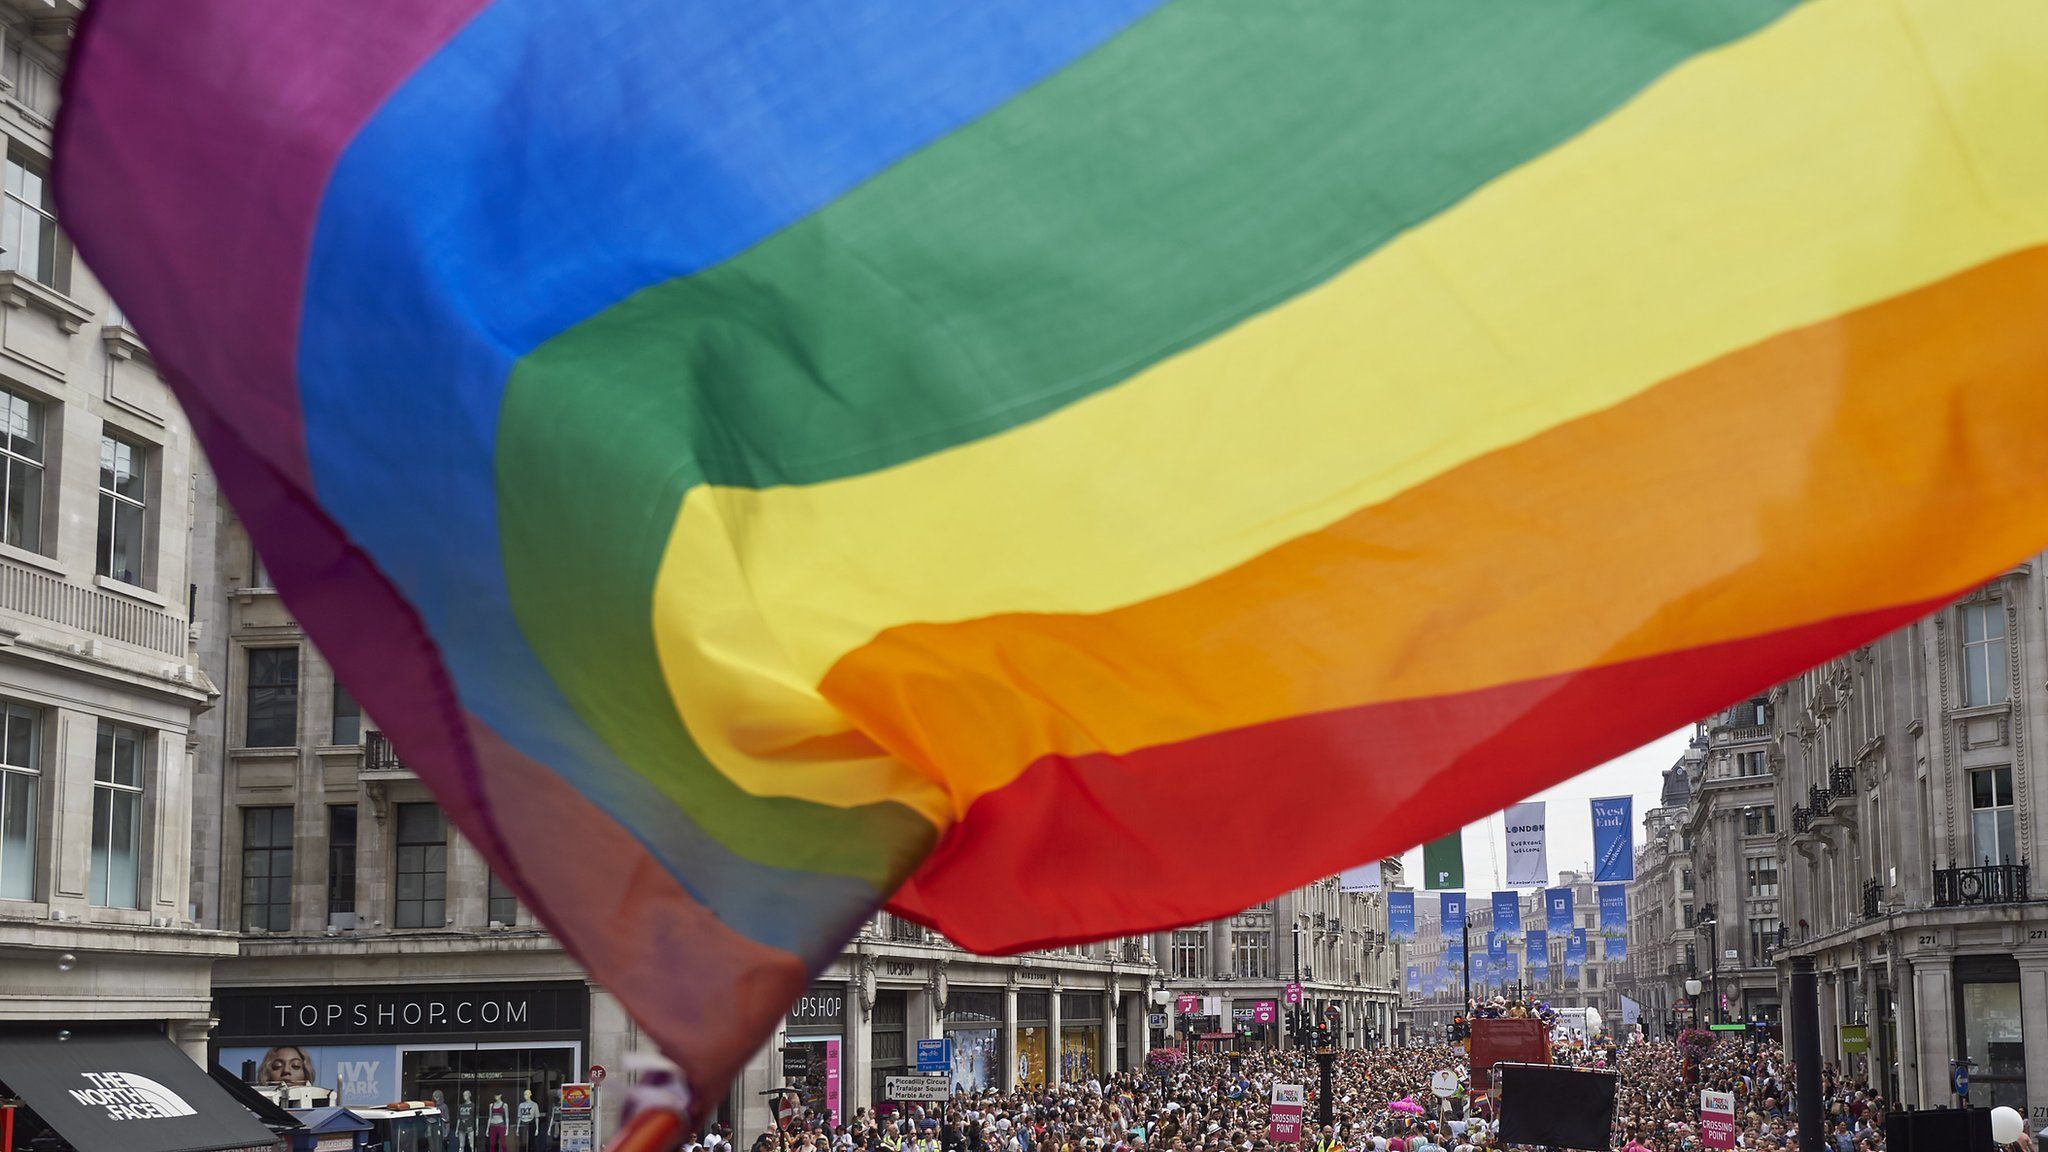 a rainbow flag flies above London's pride parade